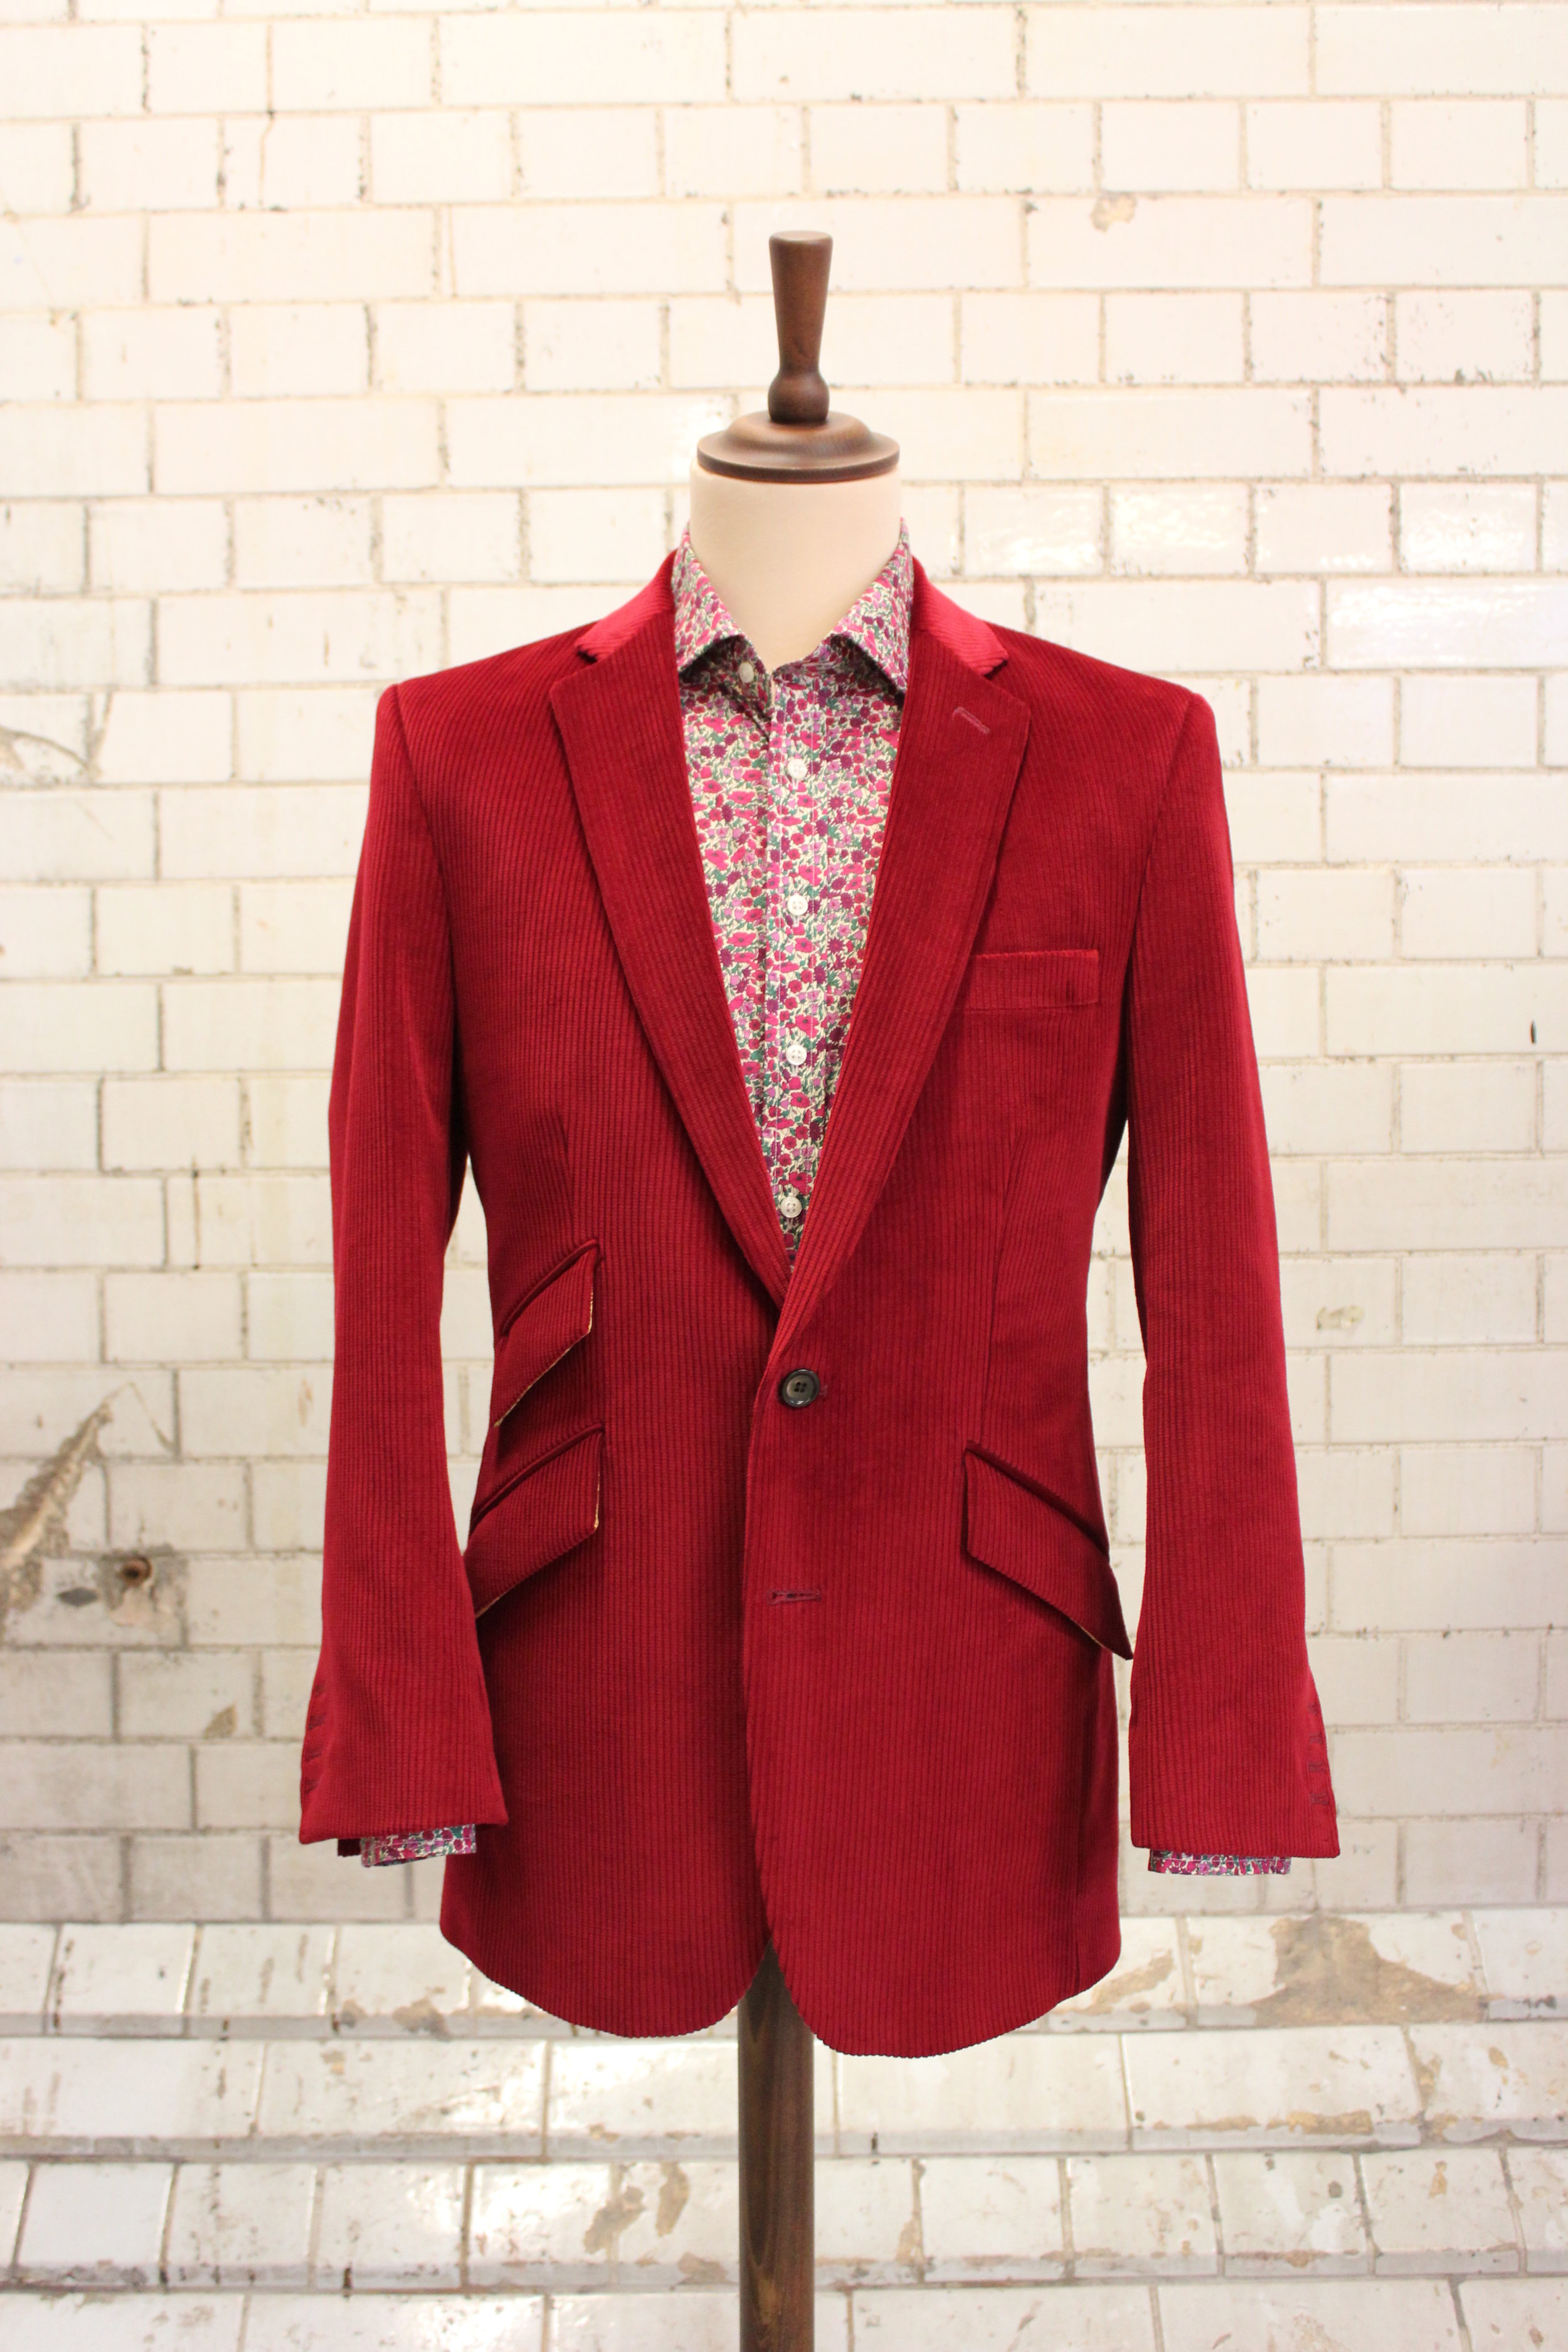 red-cord-dugdale-liberty-print-british-all-uk-made-cord-menswear-suit-shirt.JPG